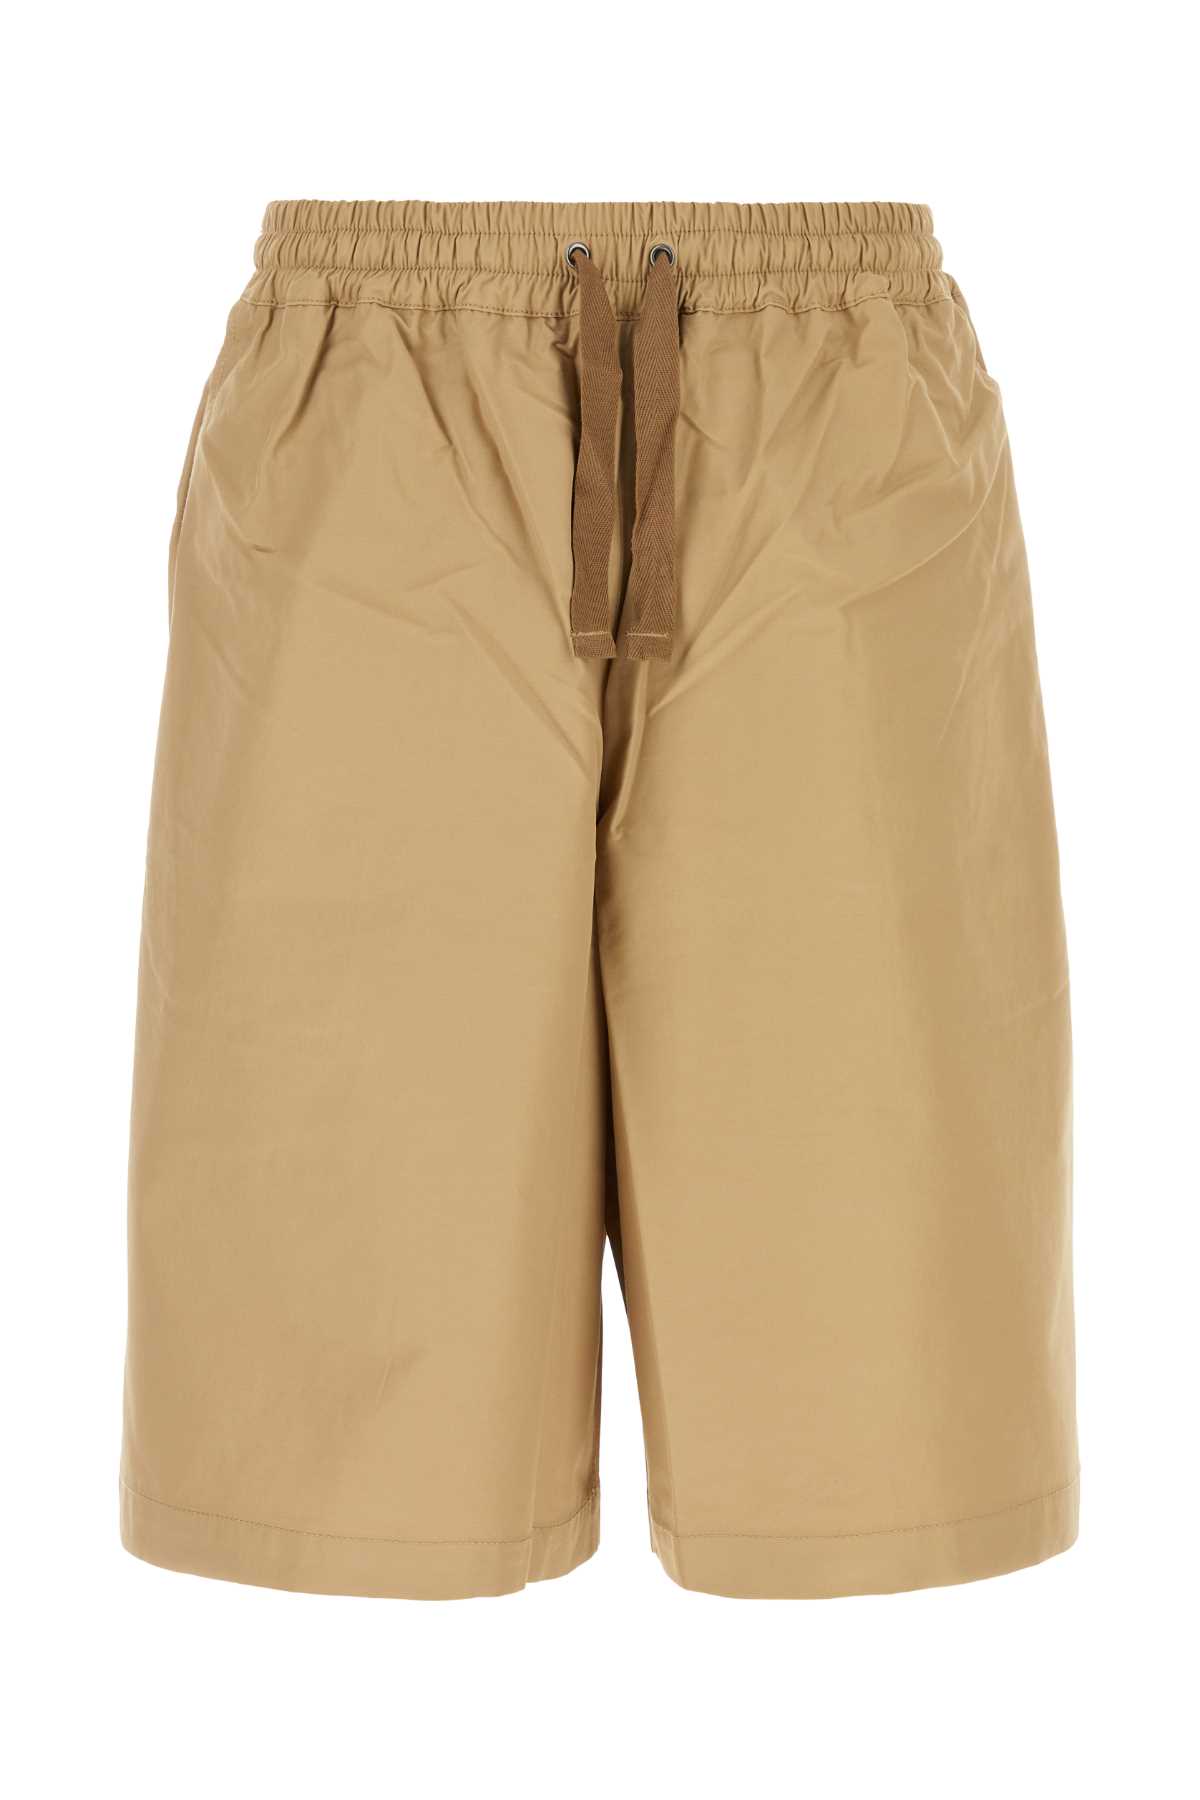 Maison Kitsuné Camel Cotton Blend Bermuda Shorts